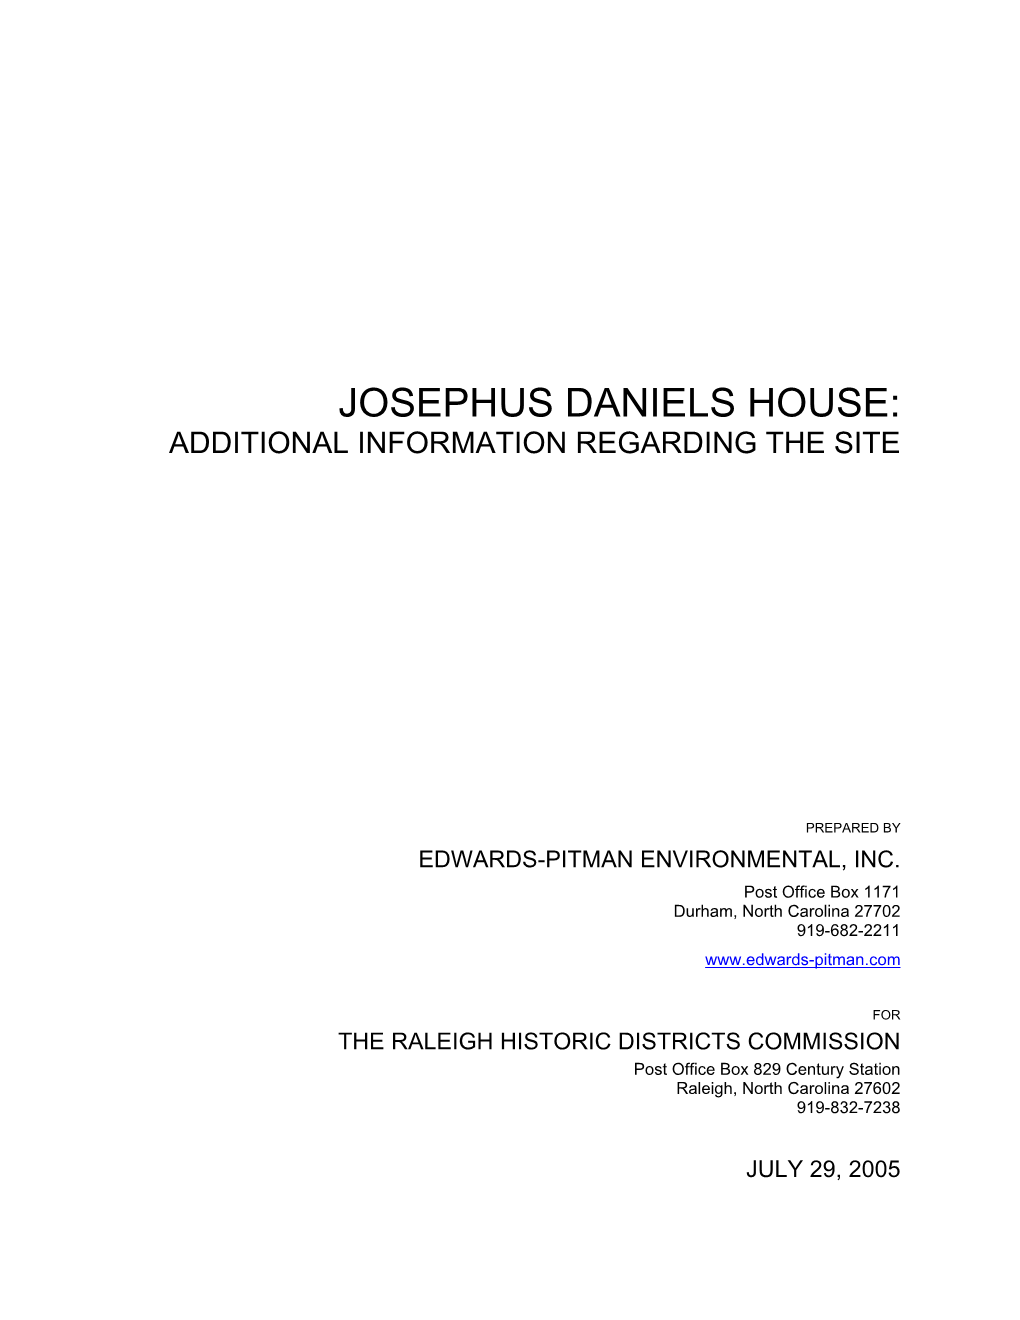 Josephus Daniels House: Additional Information Regarding the Site